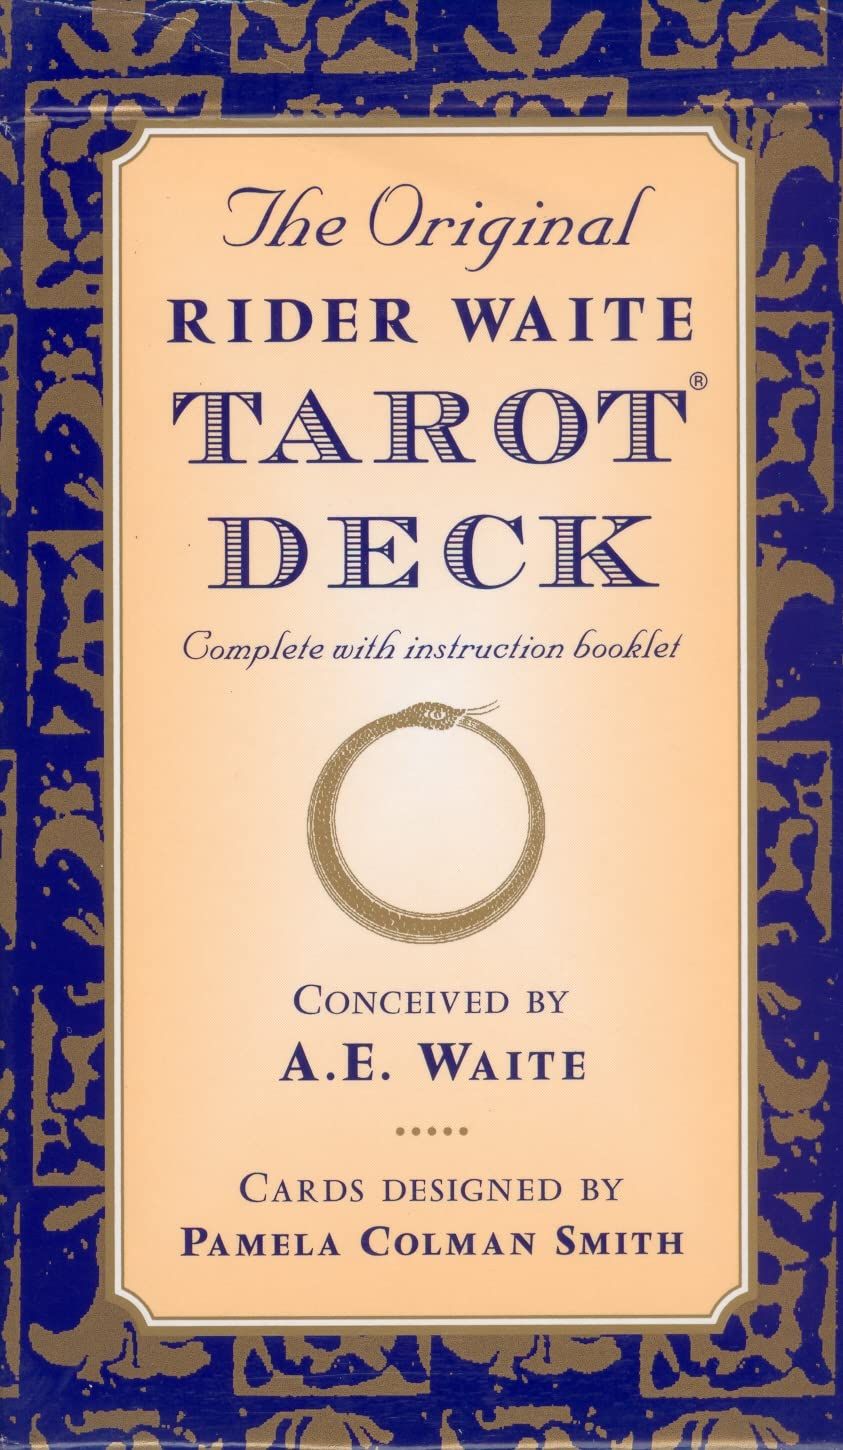 The Original Rider Waite Tarot Deck: 78 cards